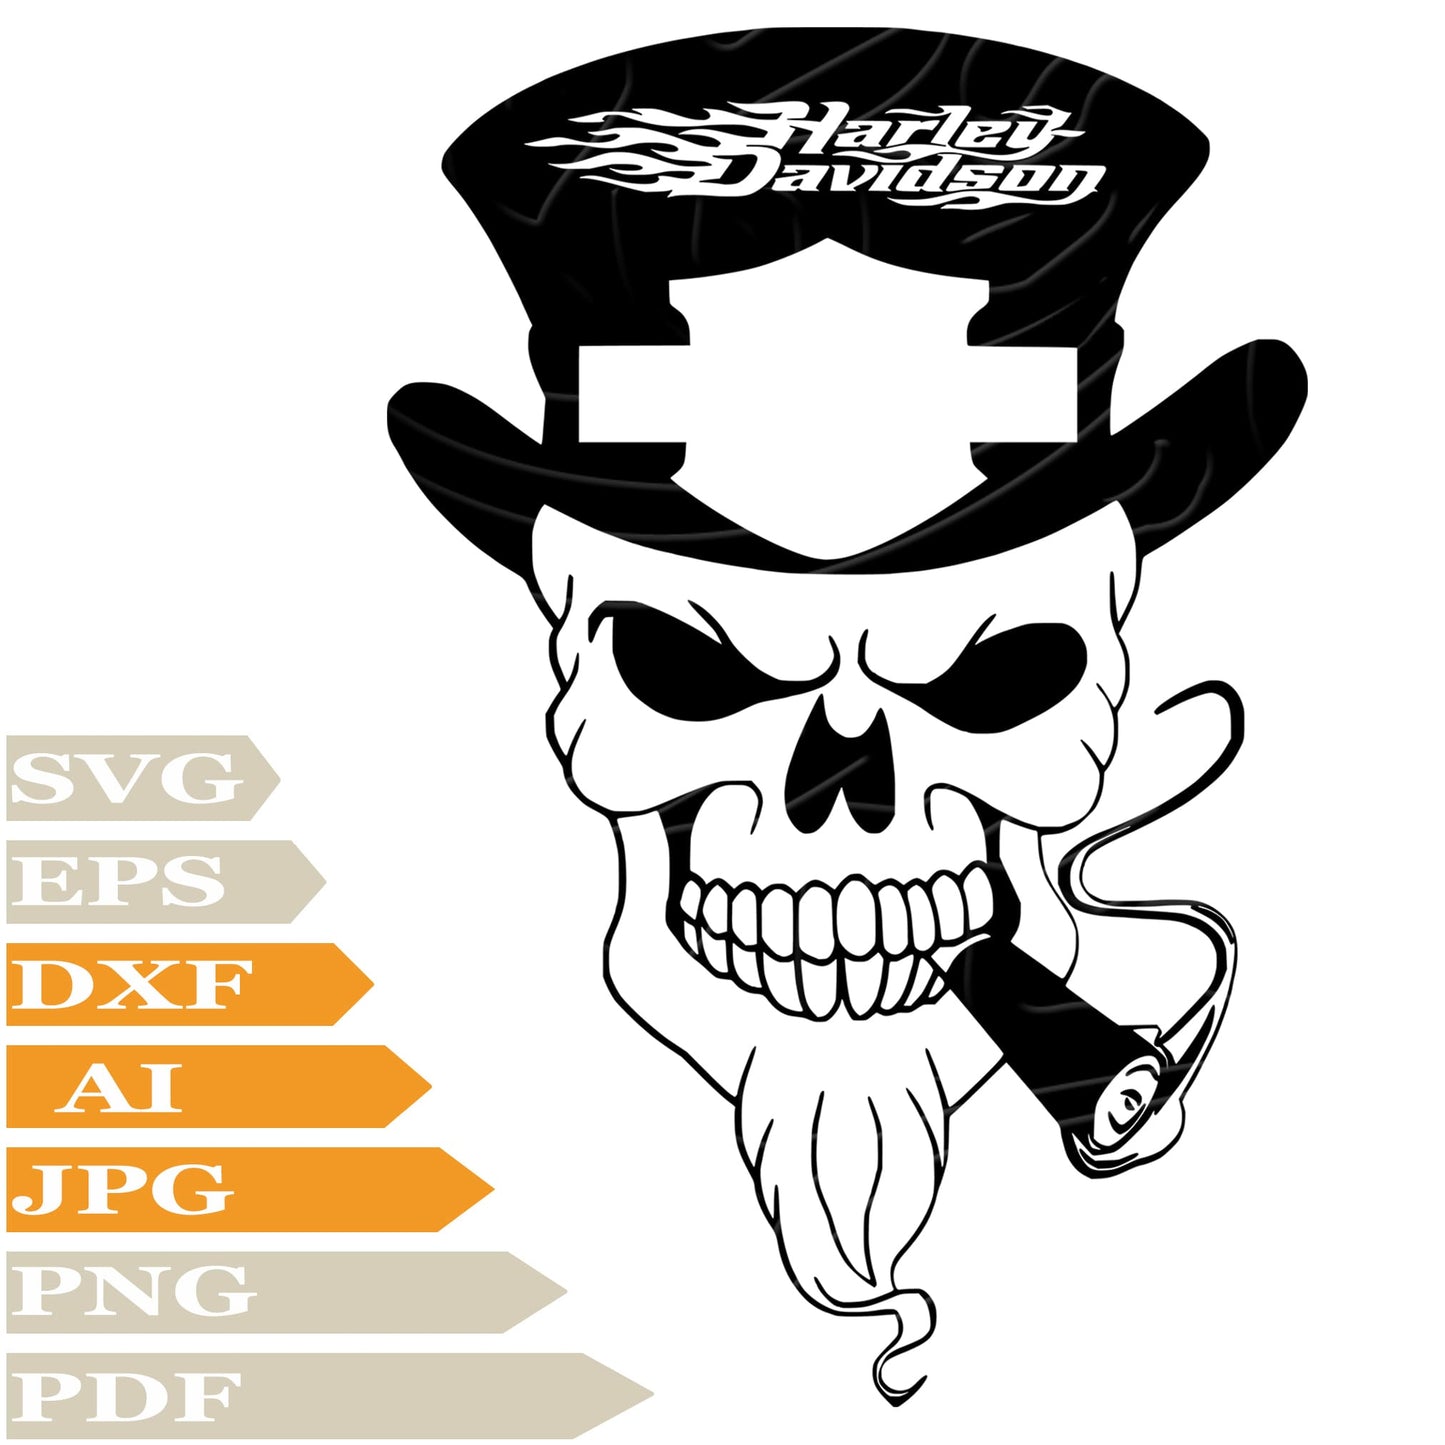 Skull ﻿Harley Davidson SVG, Skull In Hat SVG Design, Harley Davidson Logo PNG, Harley Davidson Logo Vector Graphics, Harley Logo For Cricut, Digital Instant Download, Clip Art, Cut File, T-Shirts, Silhouette